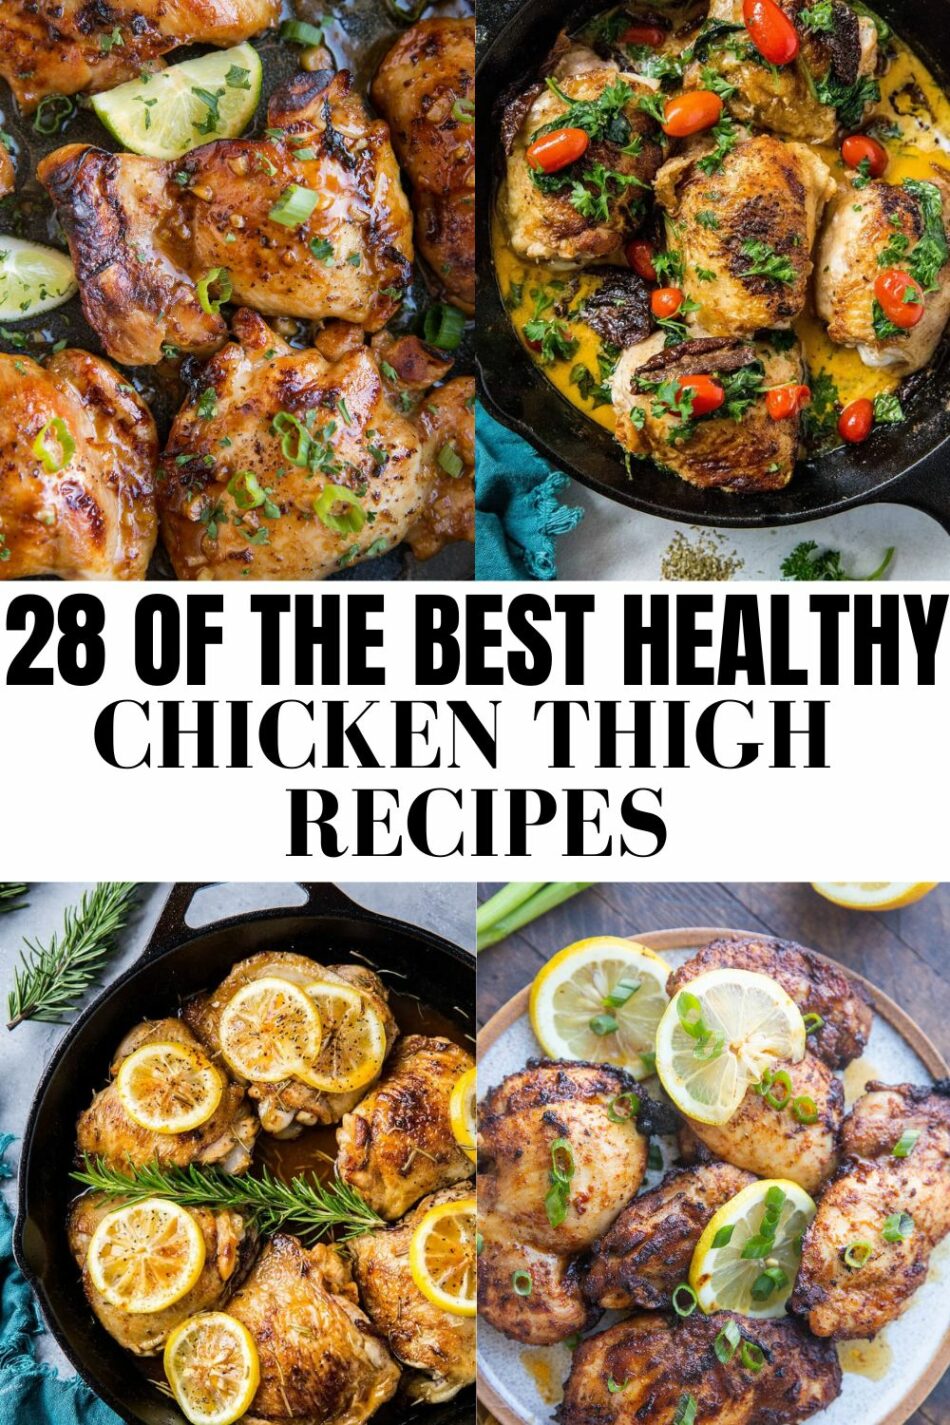 The Best Chicken Thigh Recipes